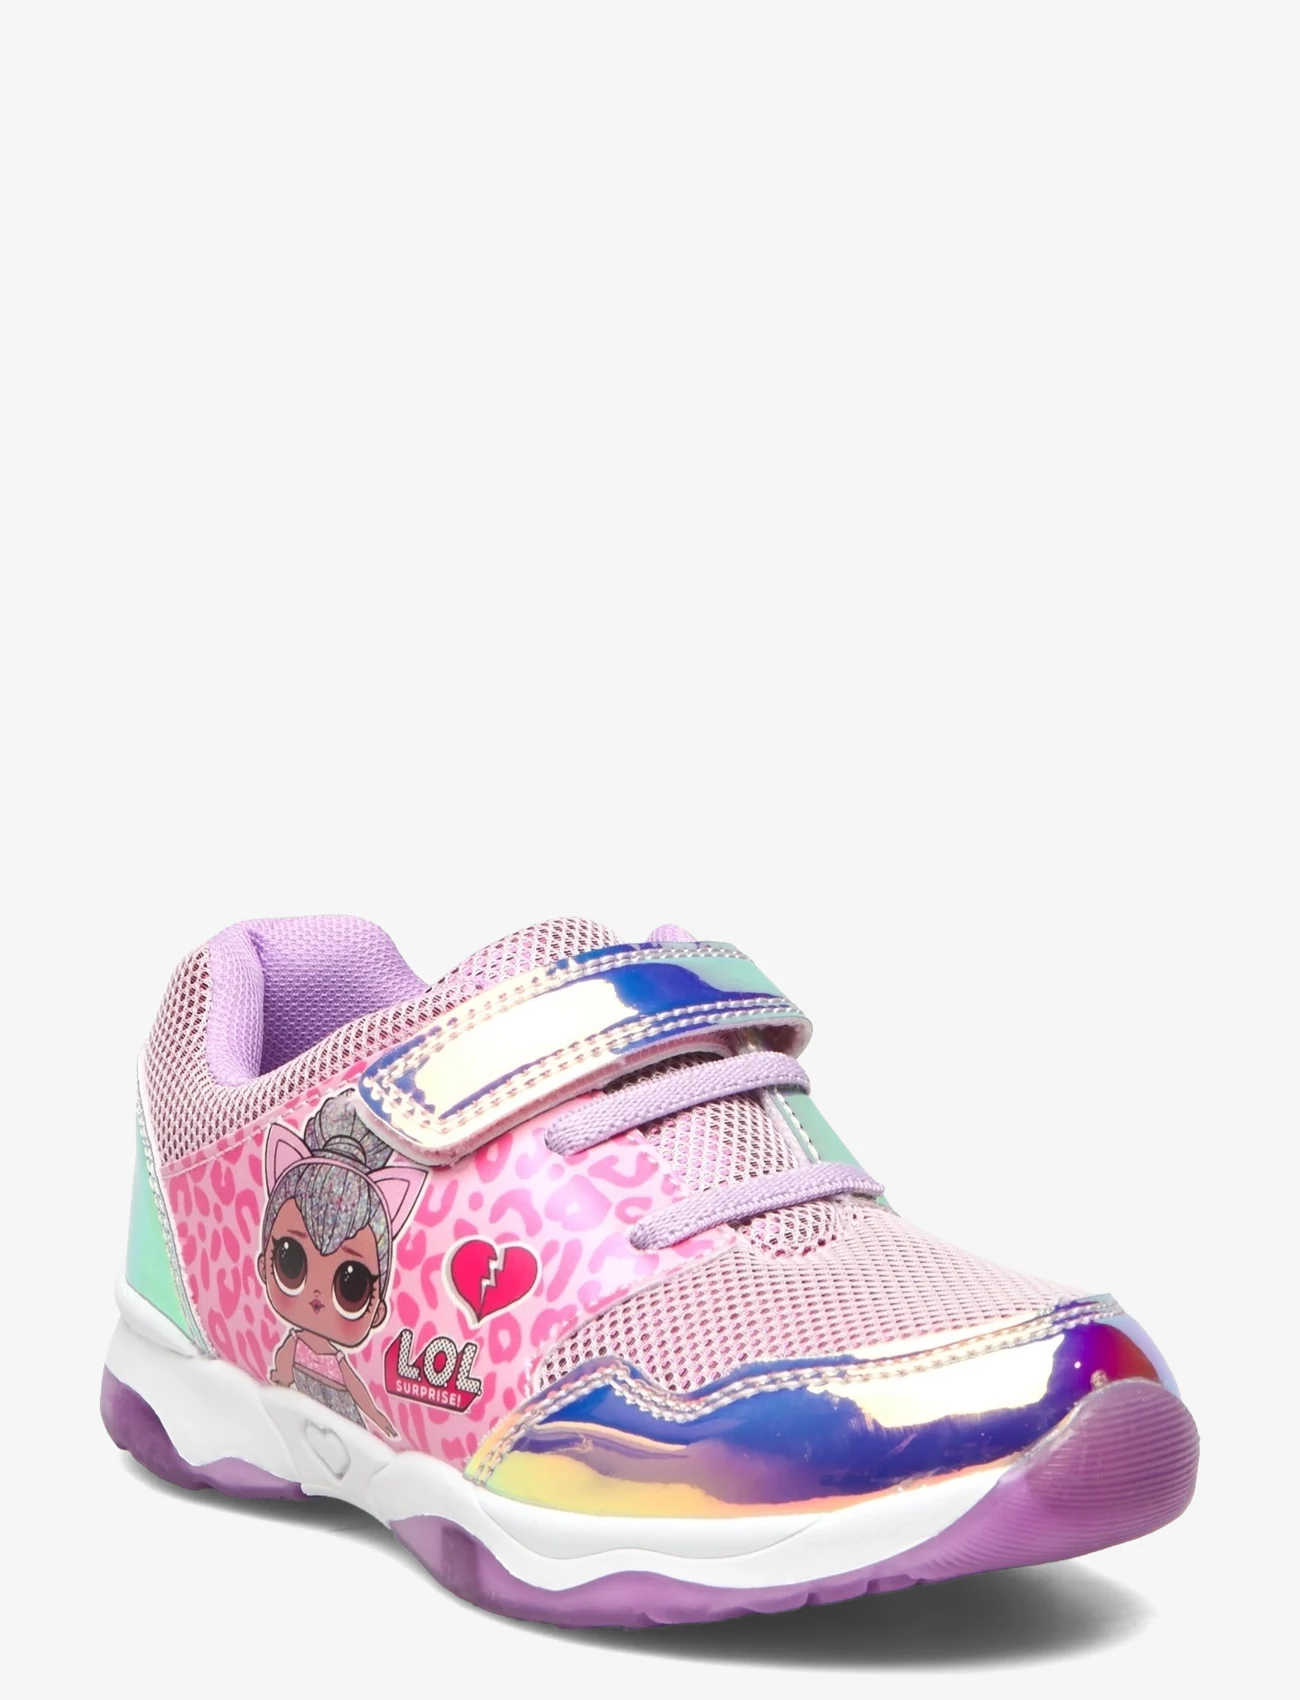 Leomil - Girls sneakers - summer savings - pink/lilac - 0